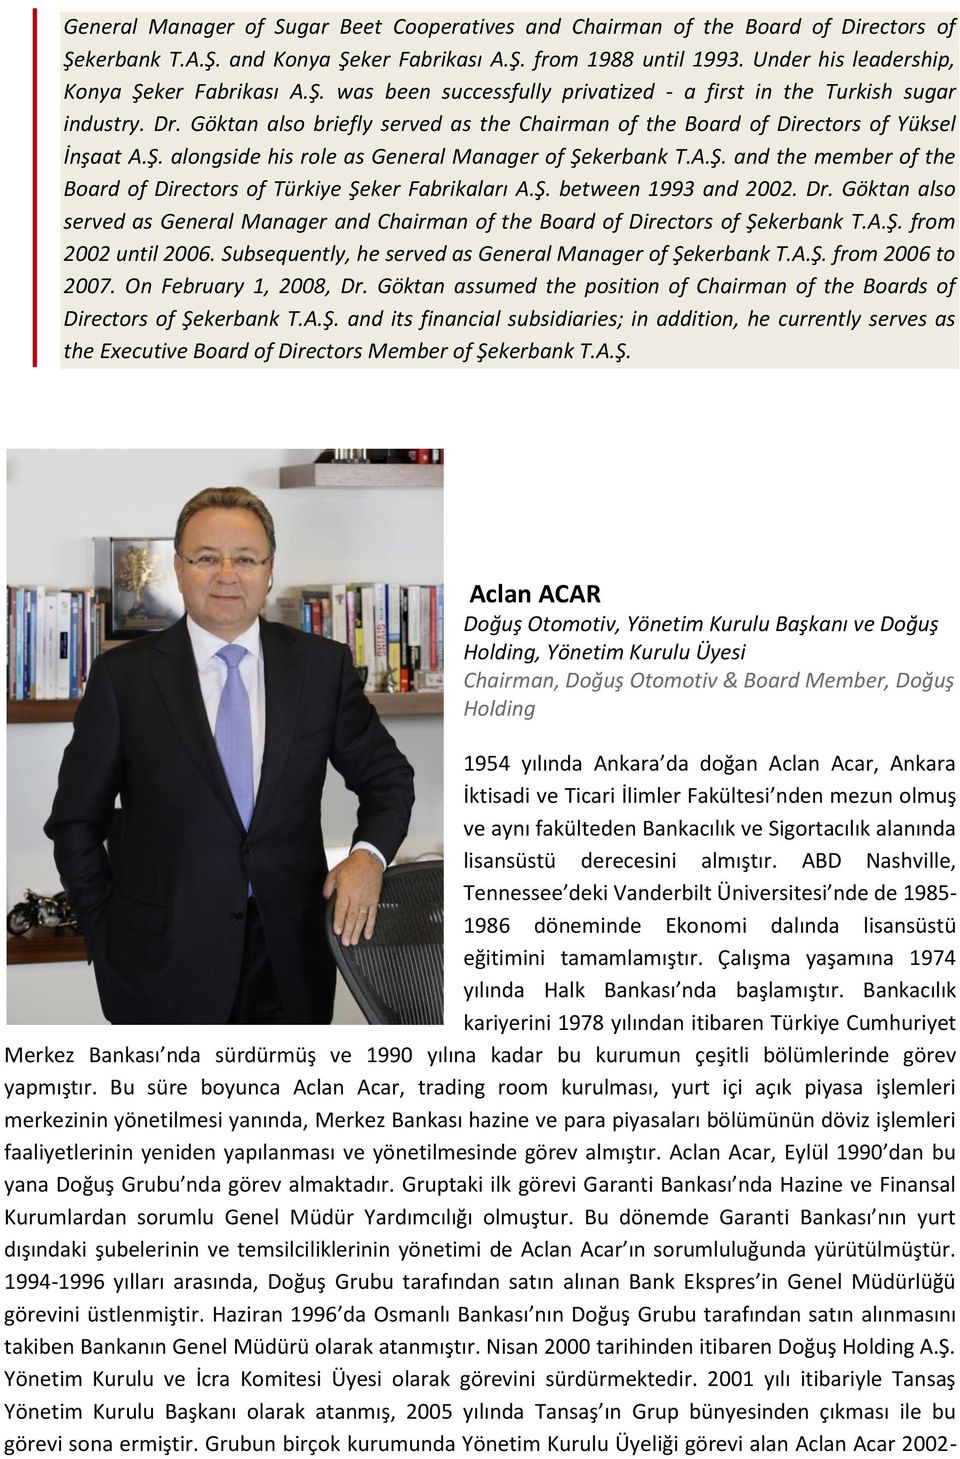 Göktan also briefly served as the Chairman of the Board of Directors of Yüksel İnşaat A.Ş. alongside his role as General Manager of Şekerbank T.A.Ş. and the member of the Board of Directors of Türkiye Şeker Fabrikaları A.